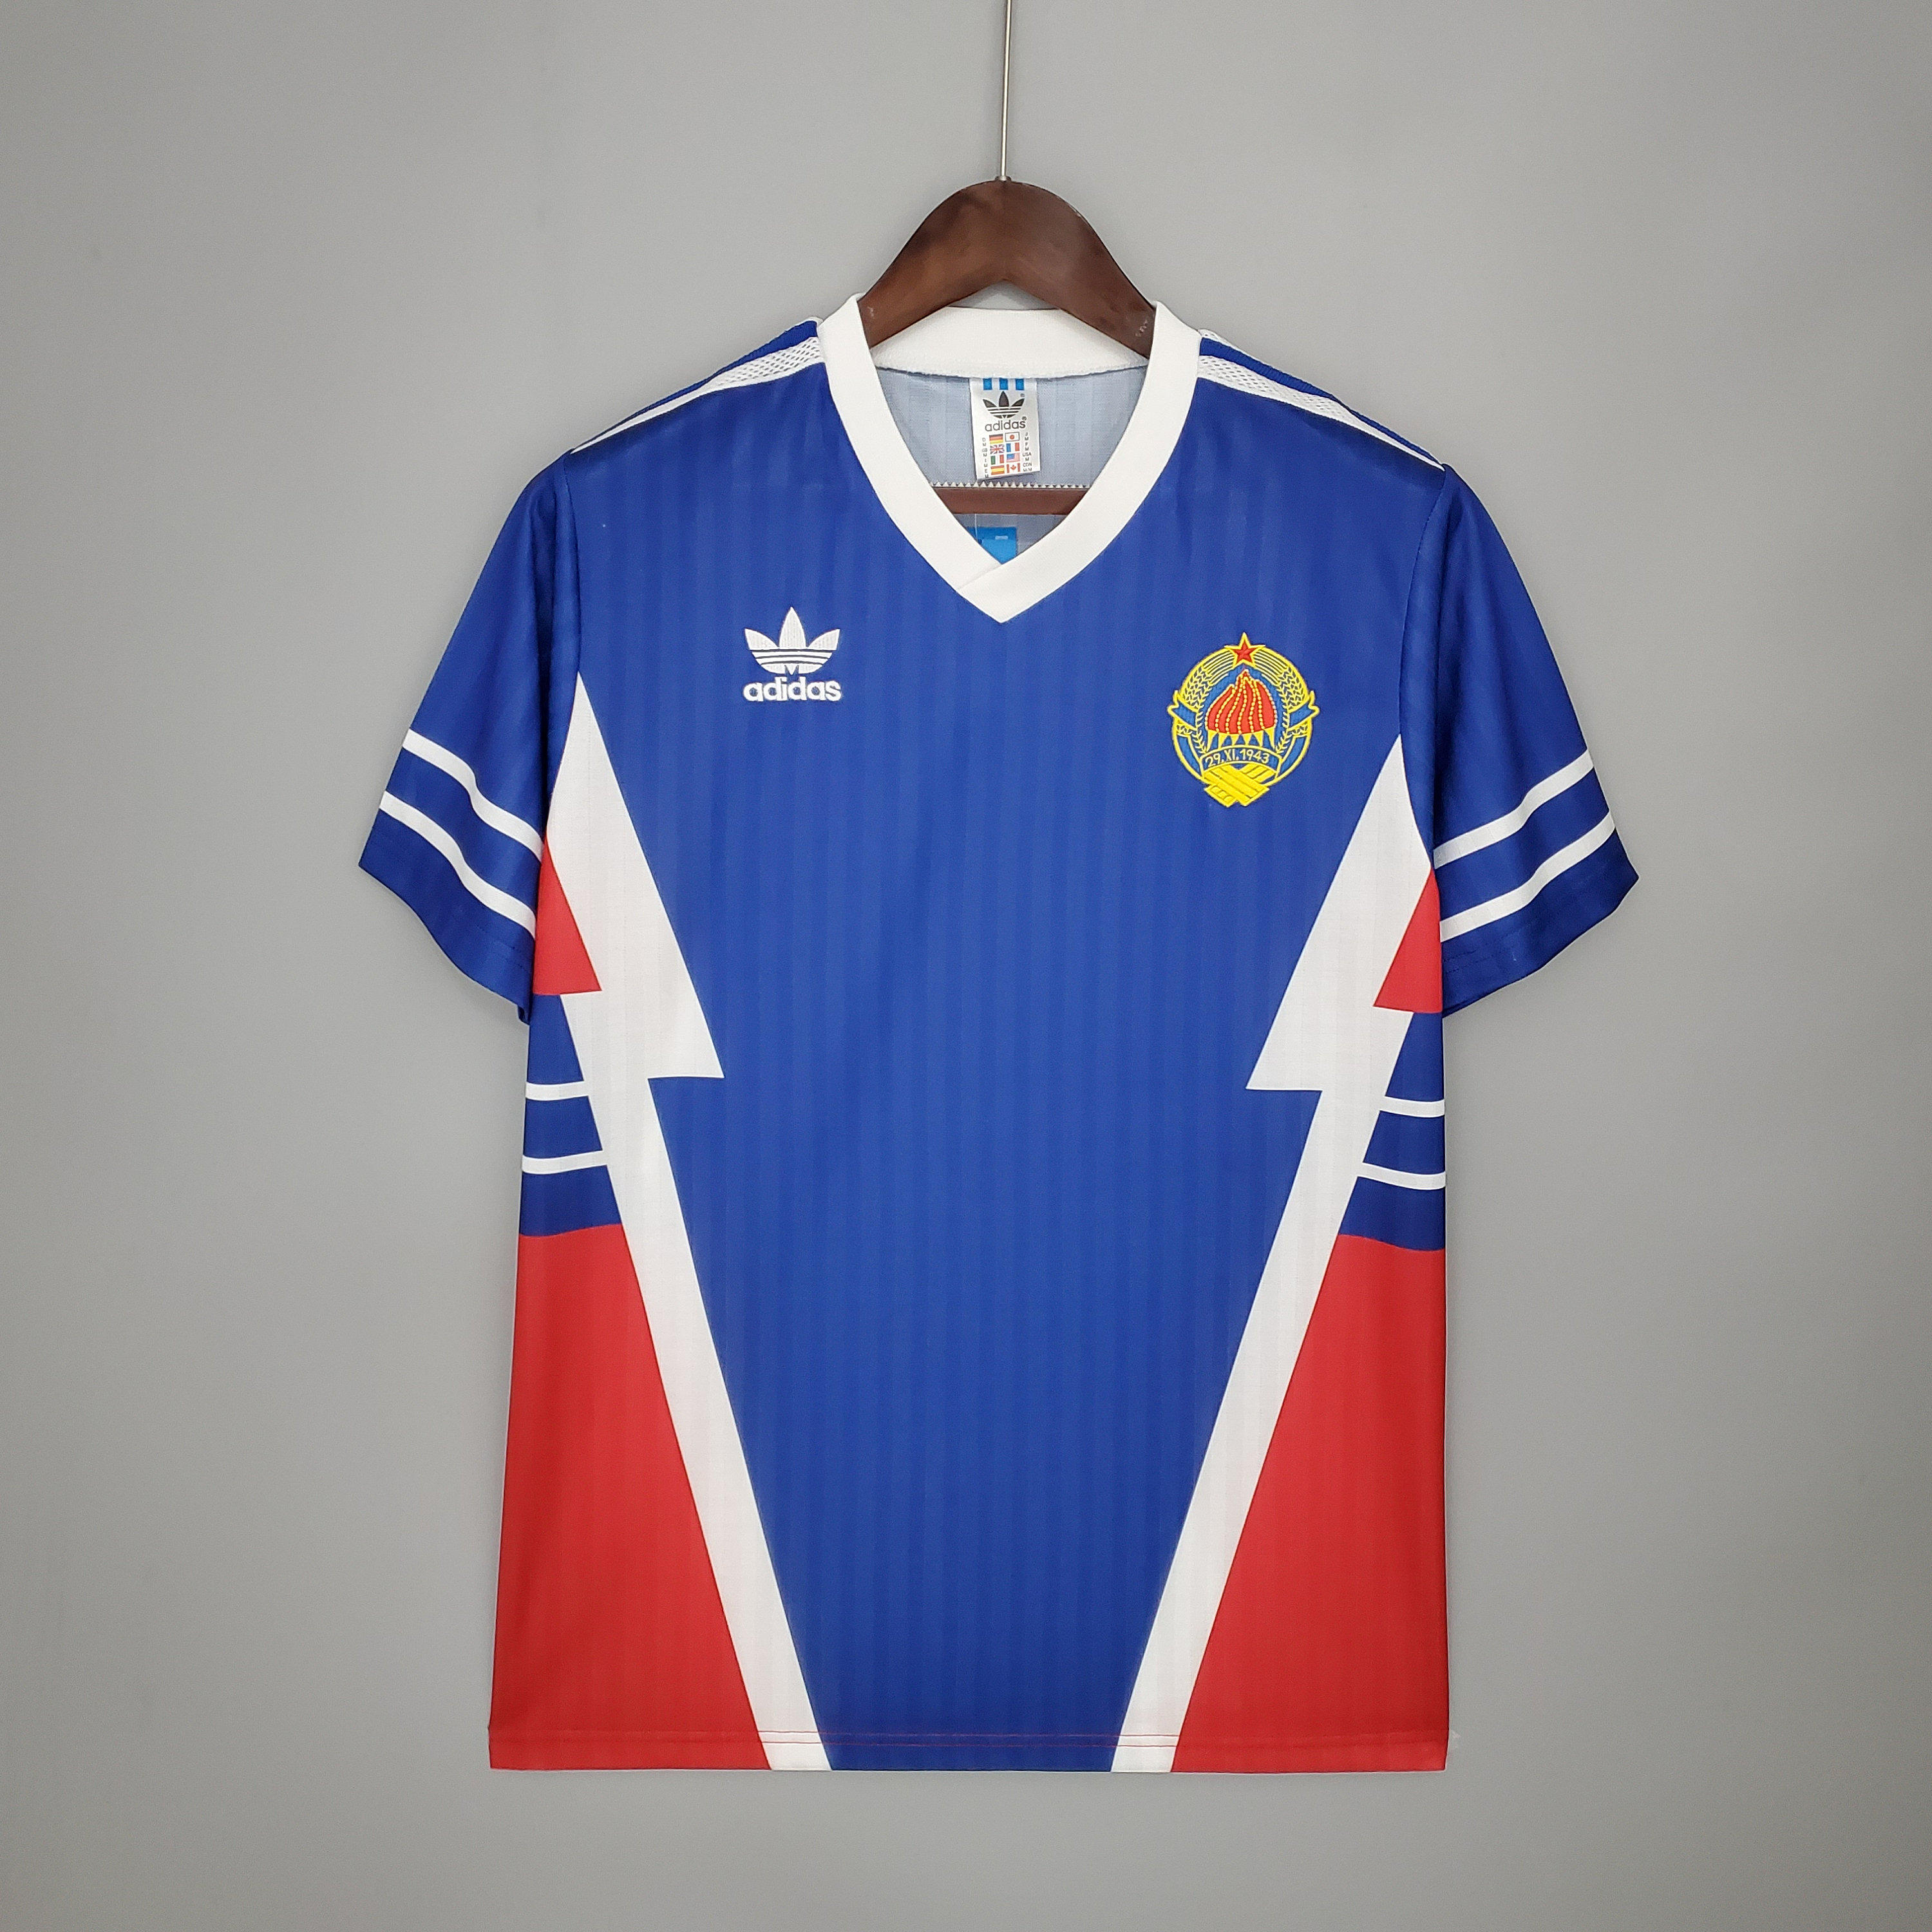 Old Radnicki Pirot football shirts and soccer jerseys